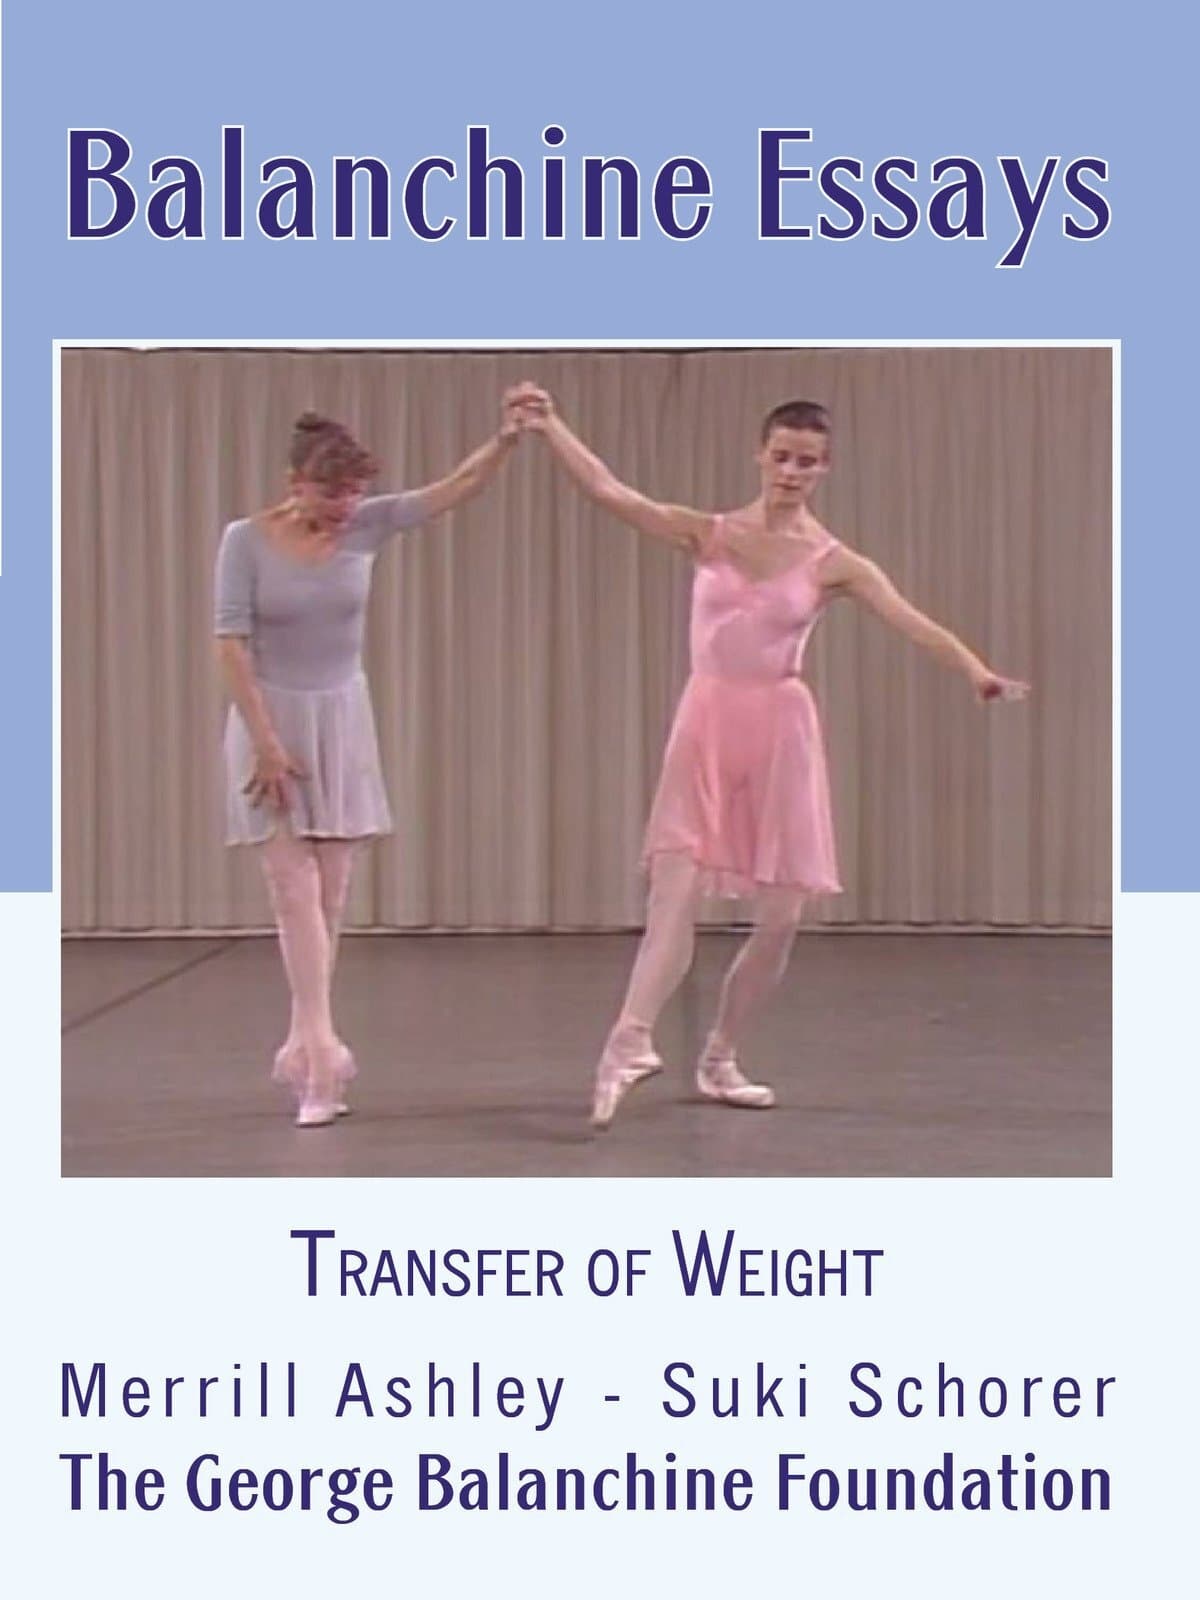 Balanchine Essays - Transfer of Weight